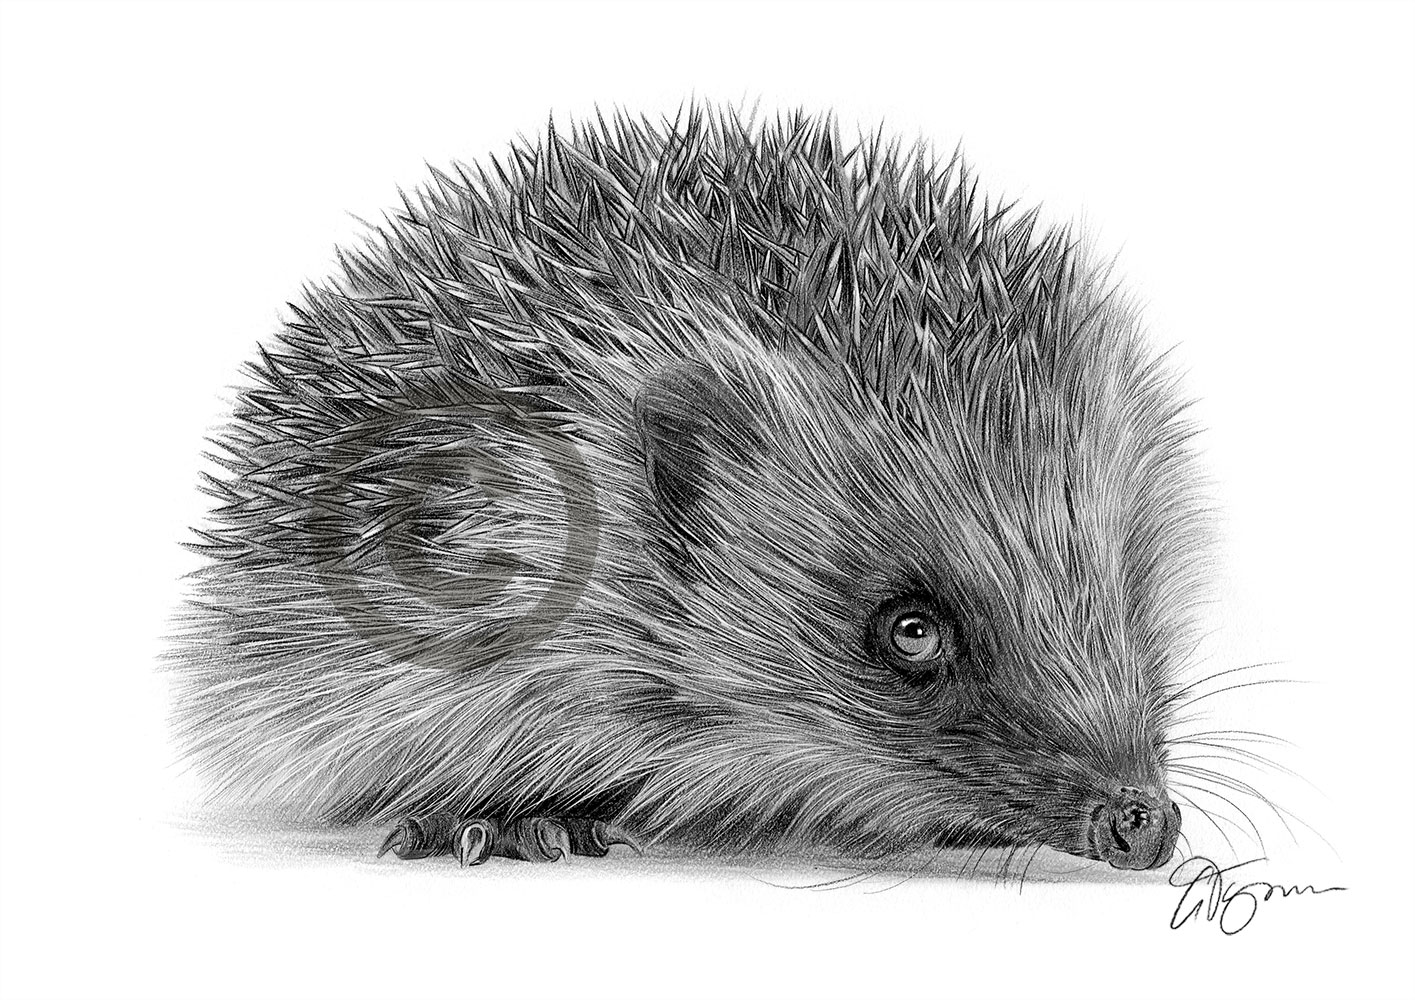 Pencil drawing of a hedgehog by artist Gary Tymon